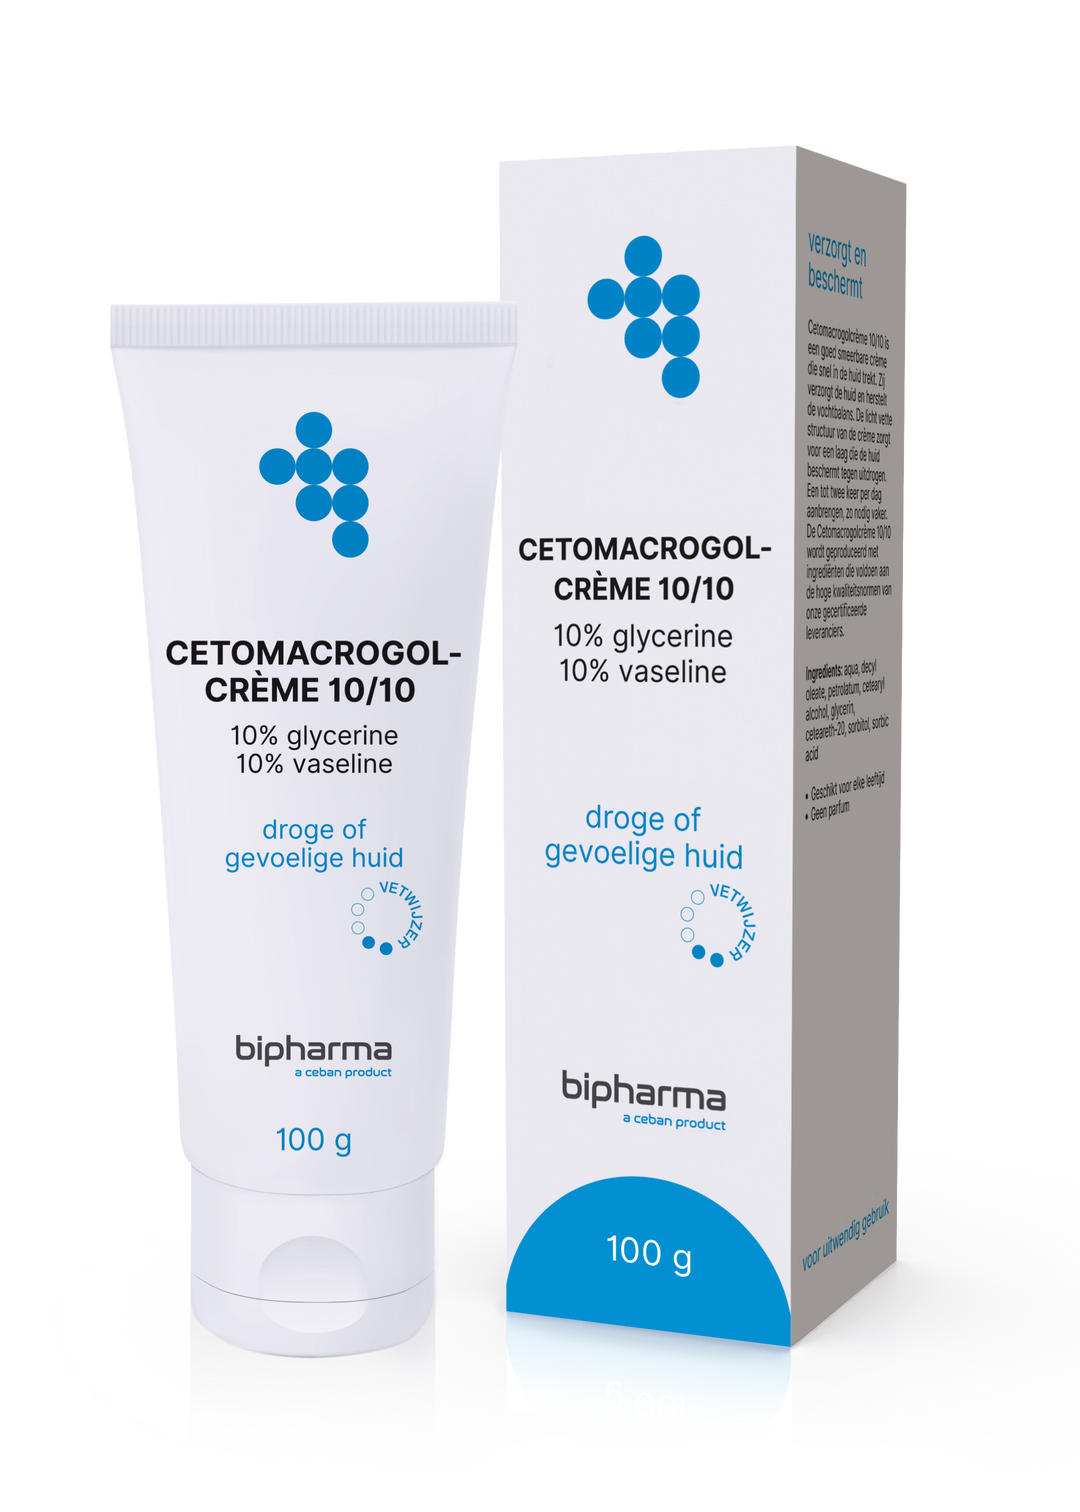 Bipharma Cetomacrogol Glycerine Vaseline 80/10/10 - BIPHARMA BV - Huidproducten.nl